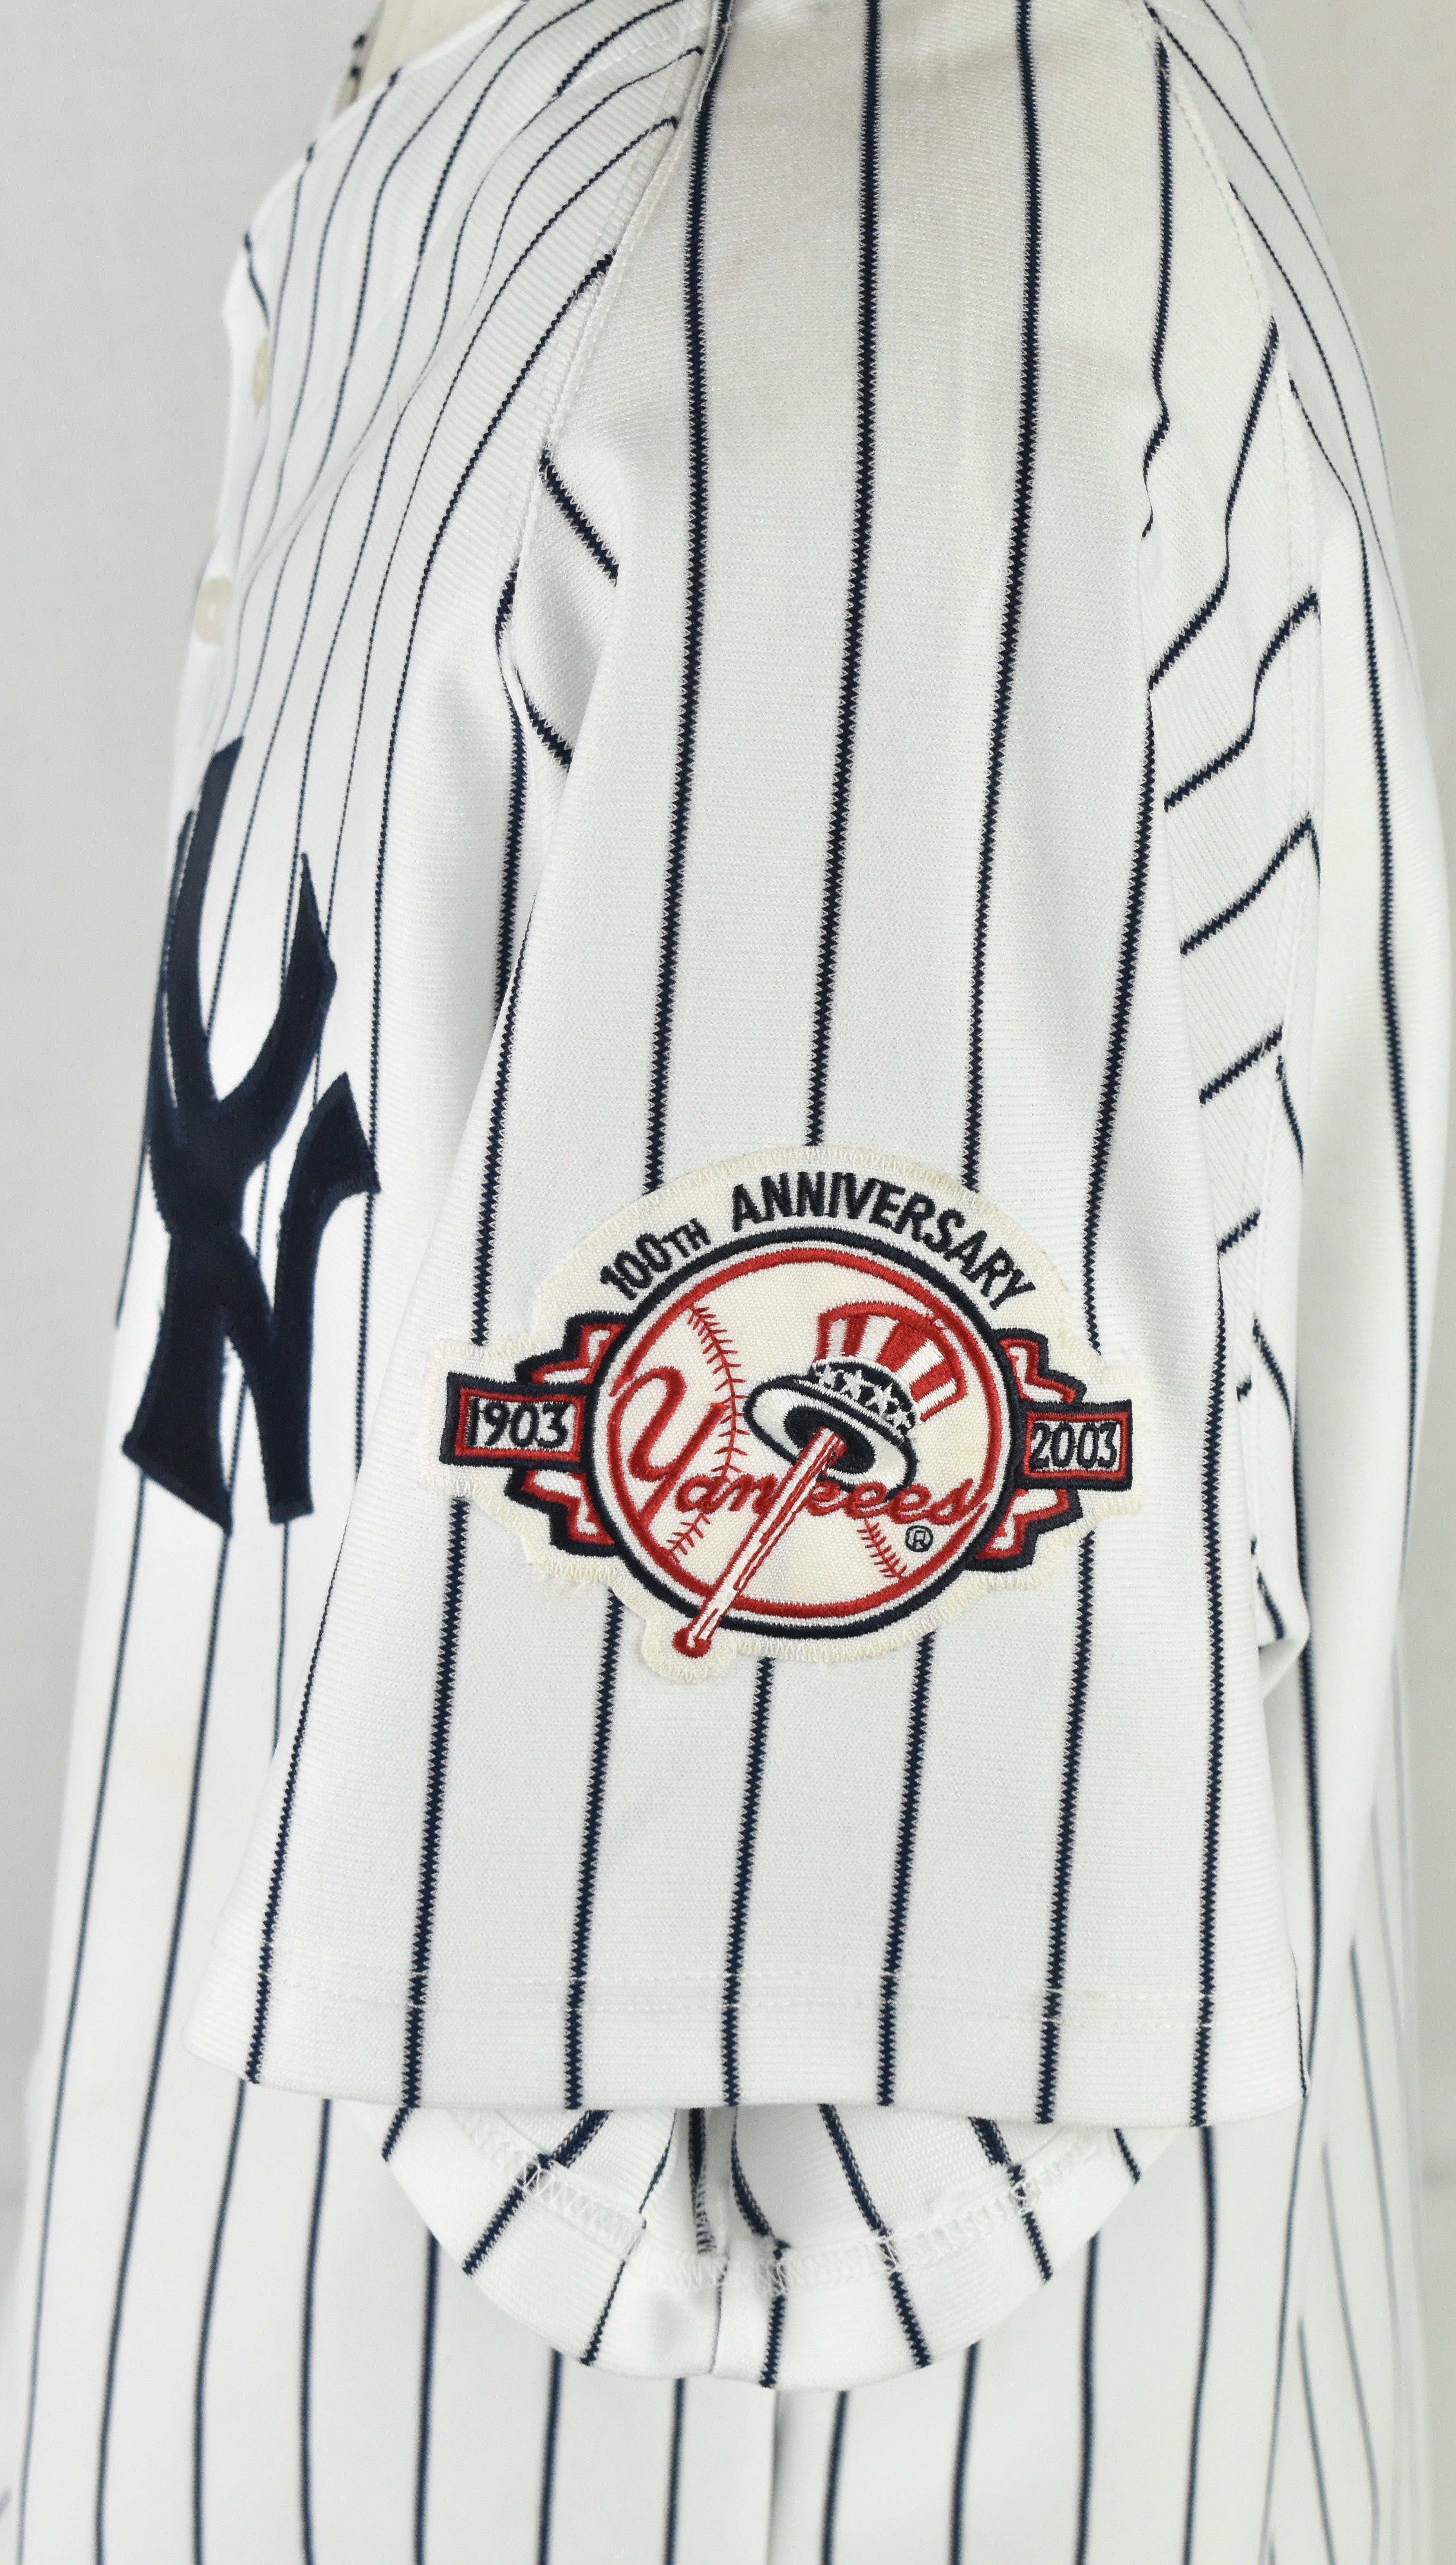 Derek Jeter #2 New York Yankees Authentic Jersey W/ 2003 100th